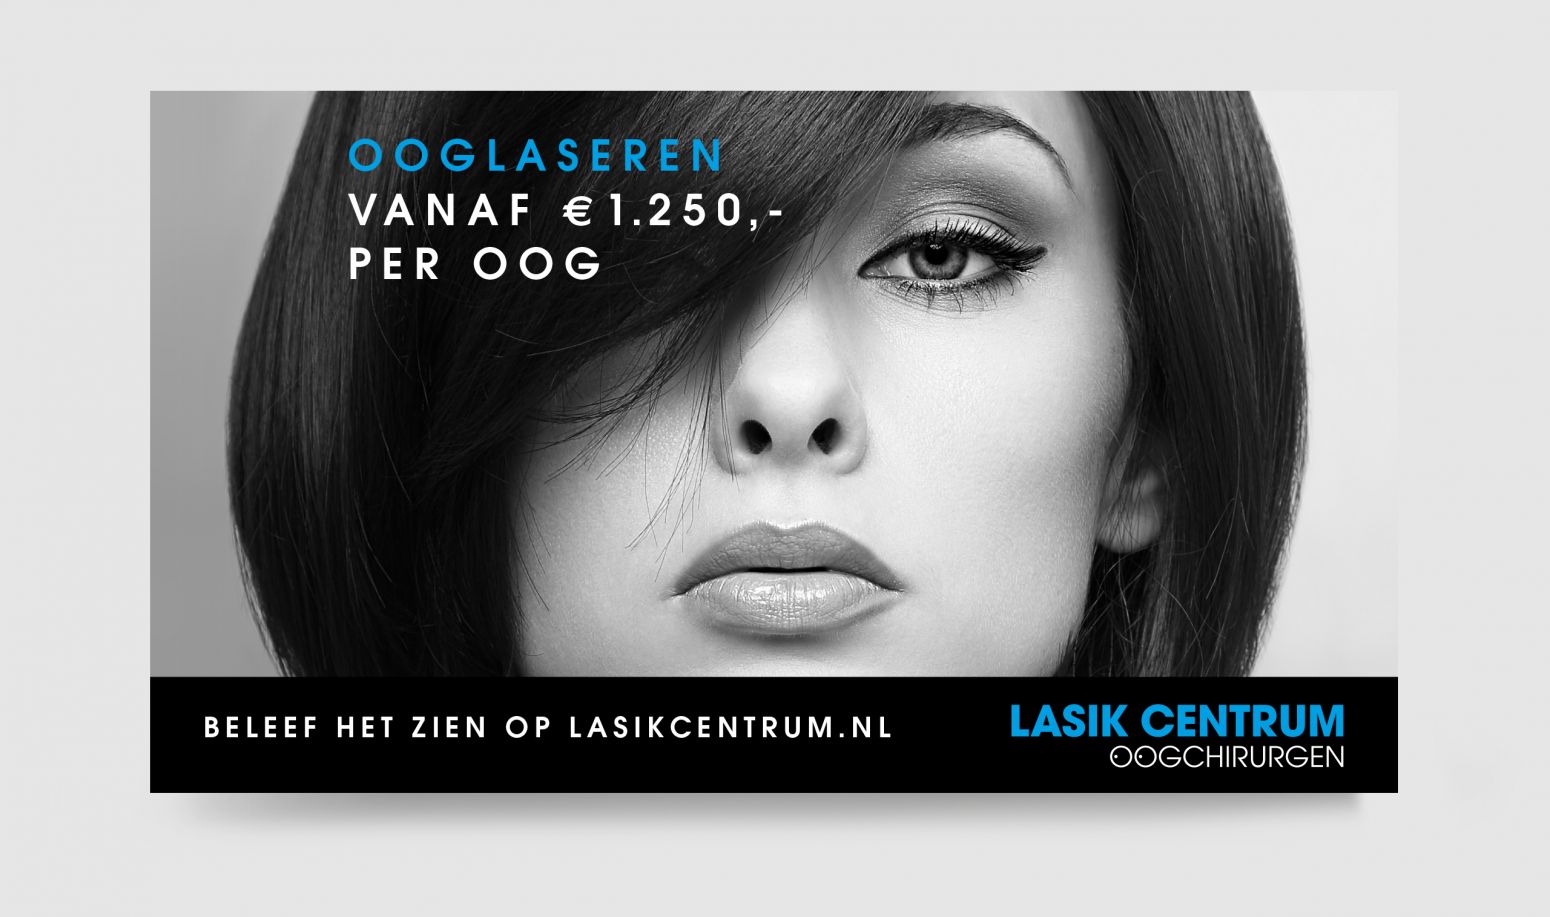 Lasik Centrum - AGH & Friends